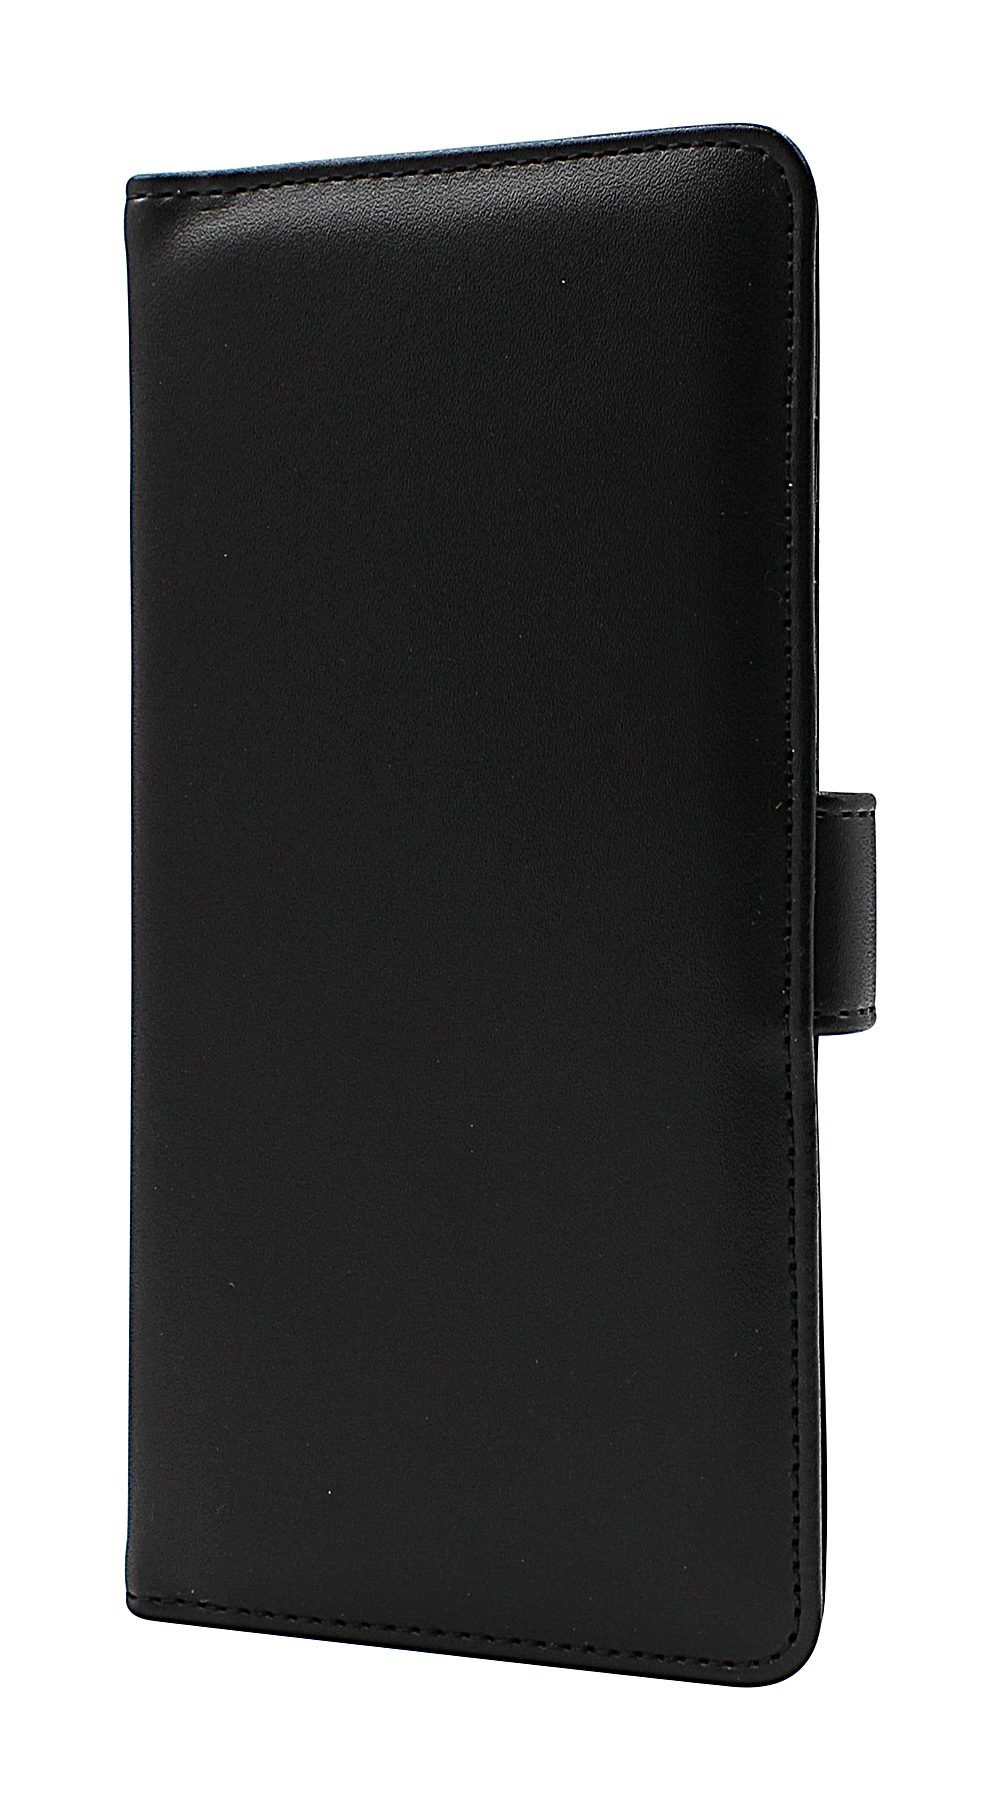 CoverIn Skimblocker Lompakkokotelot OnePlus Nord N100